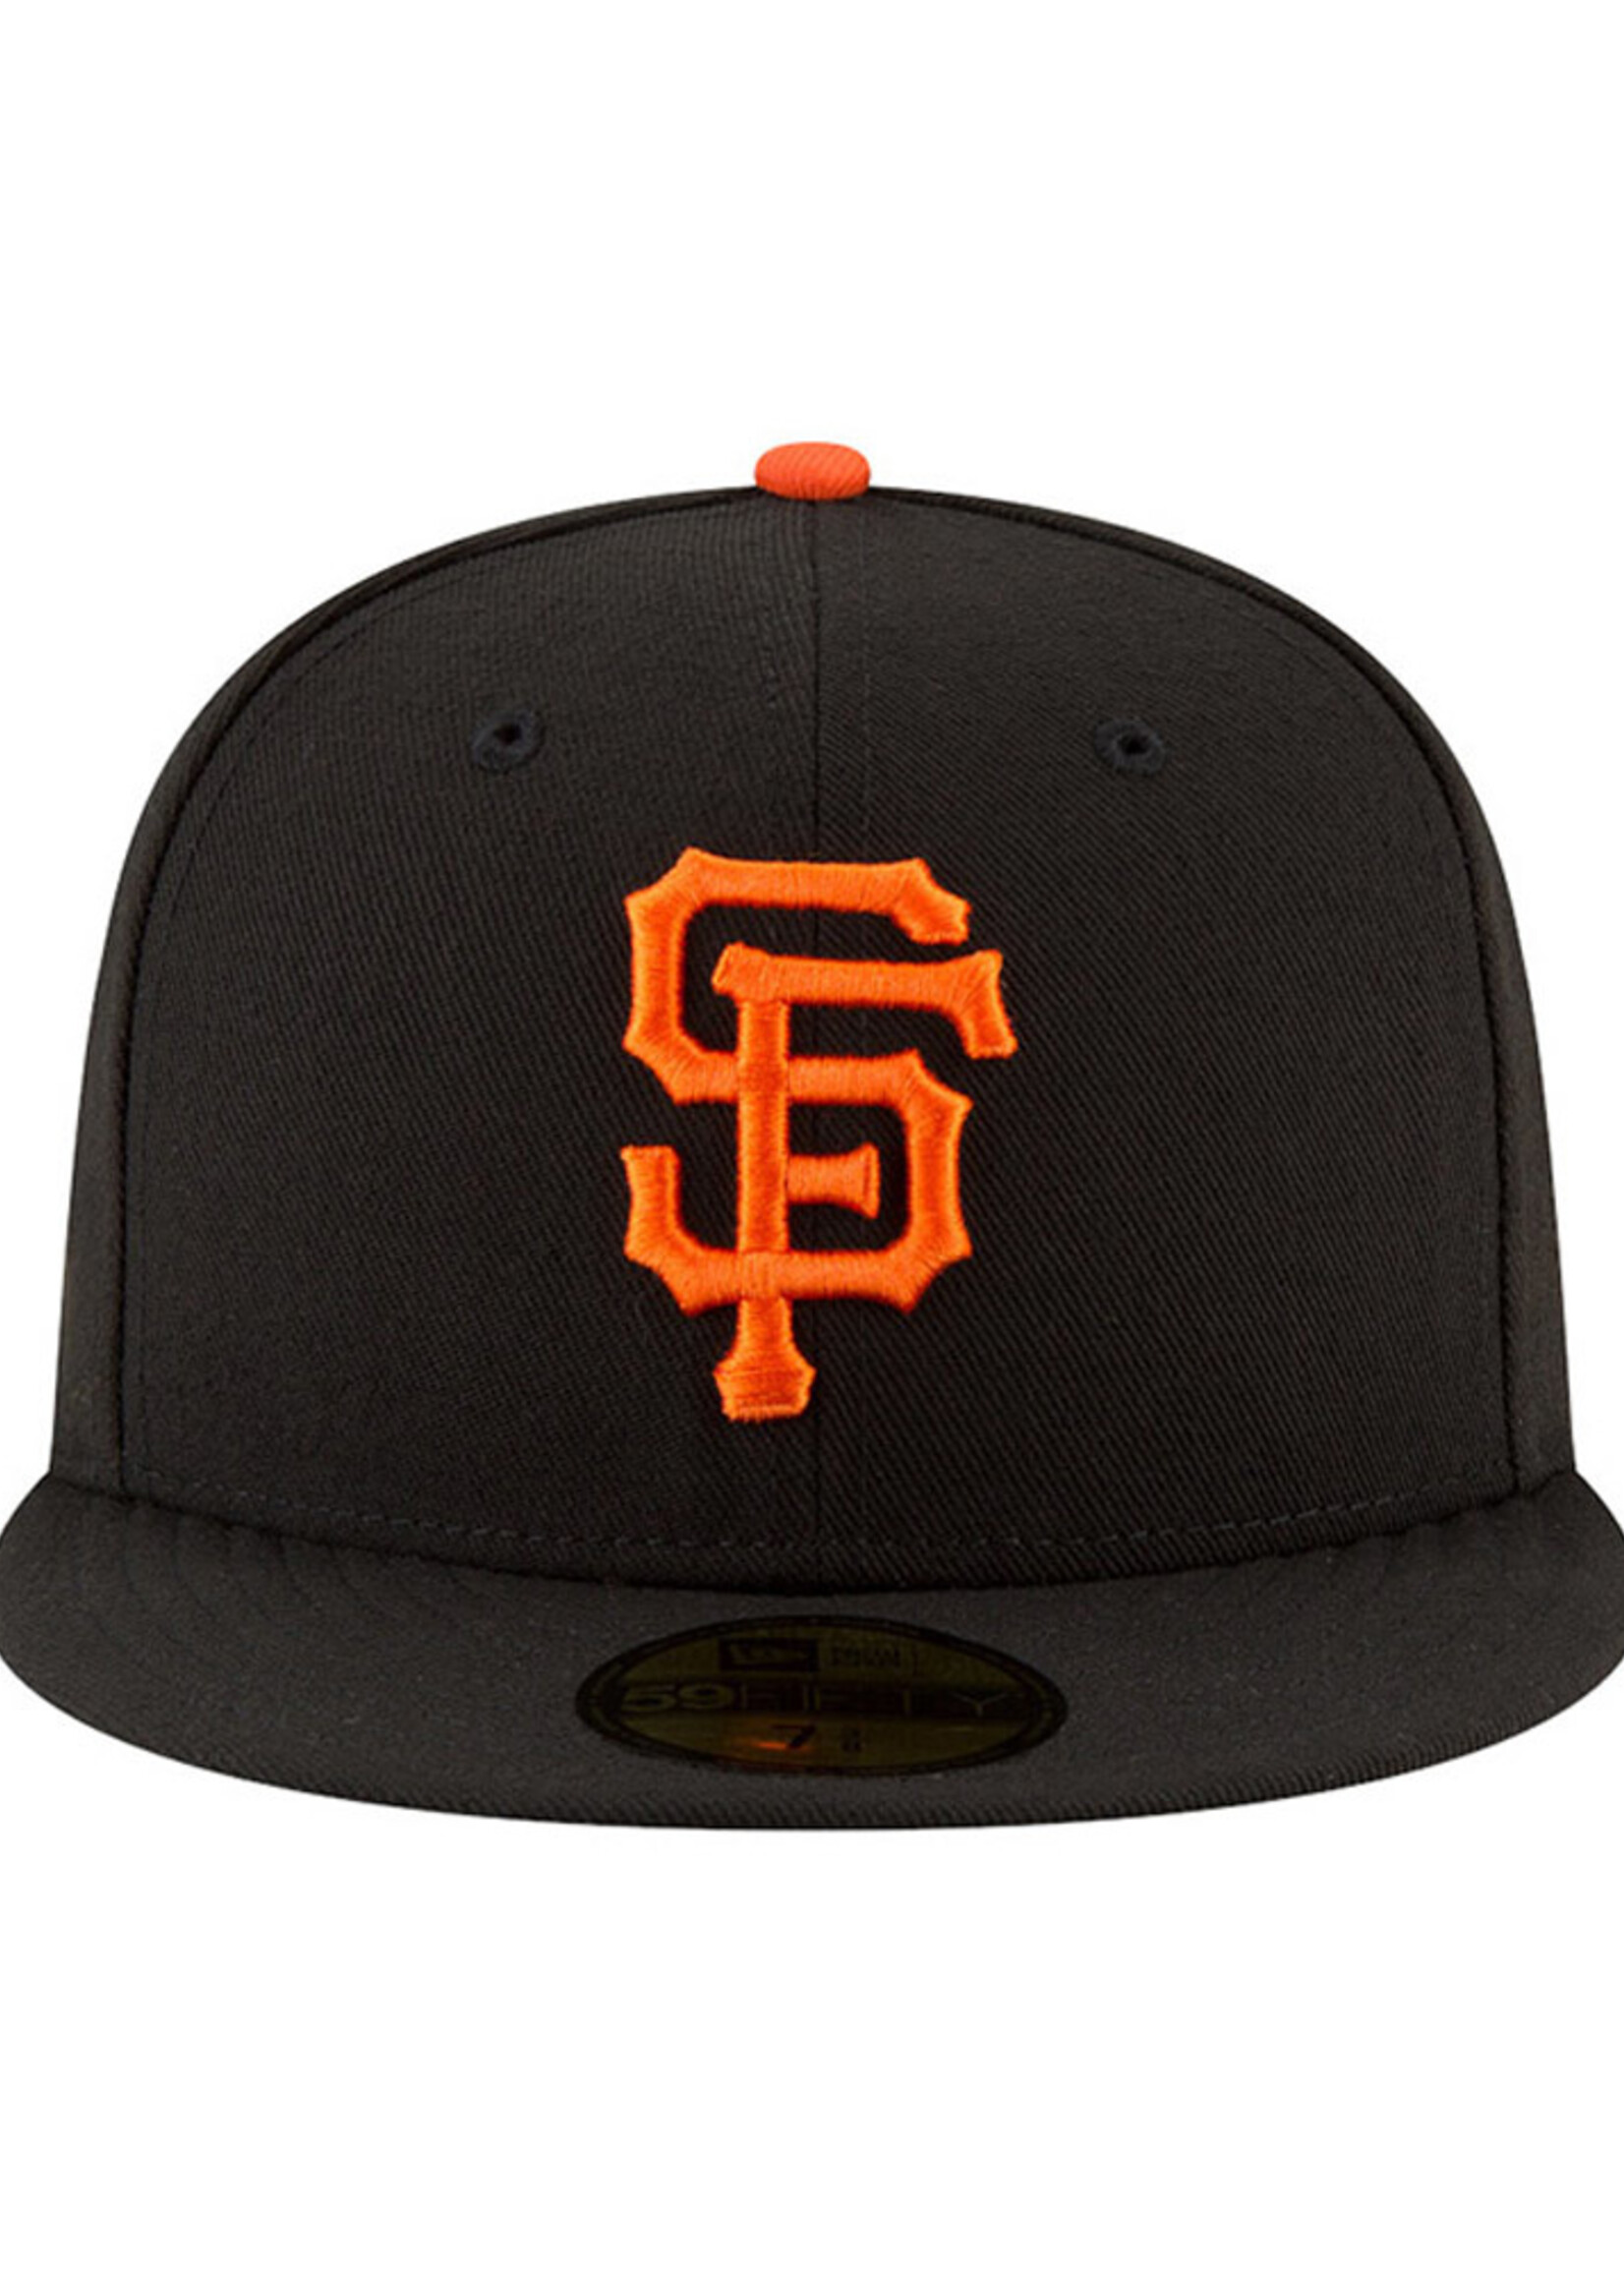 New Era San Francisco Giants Fitted Cap Black Orange